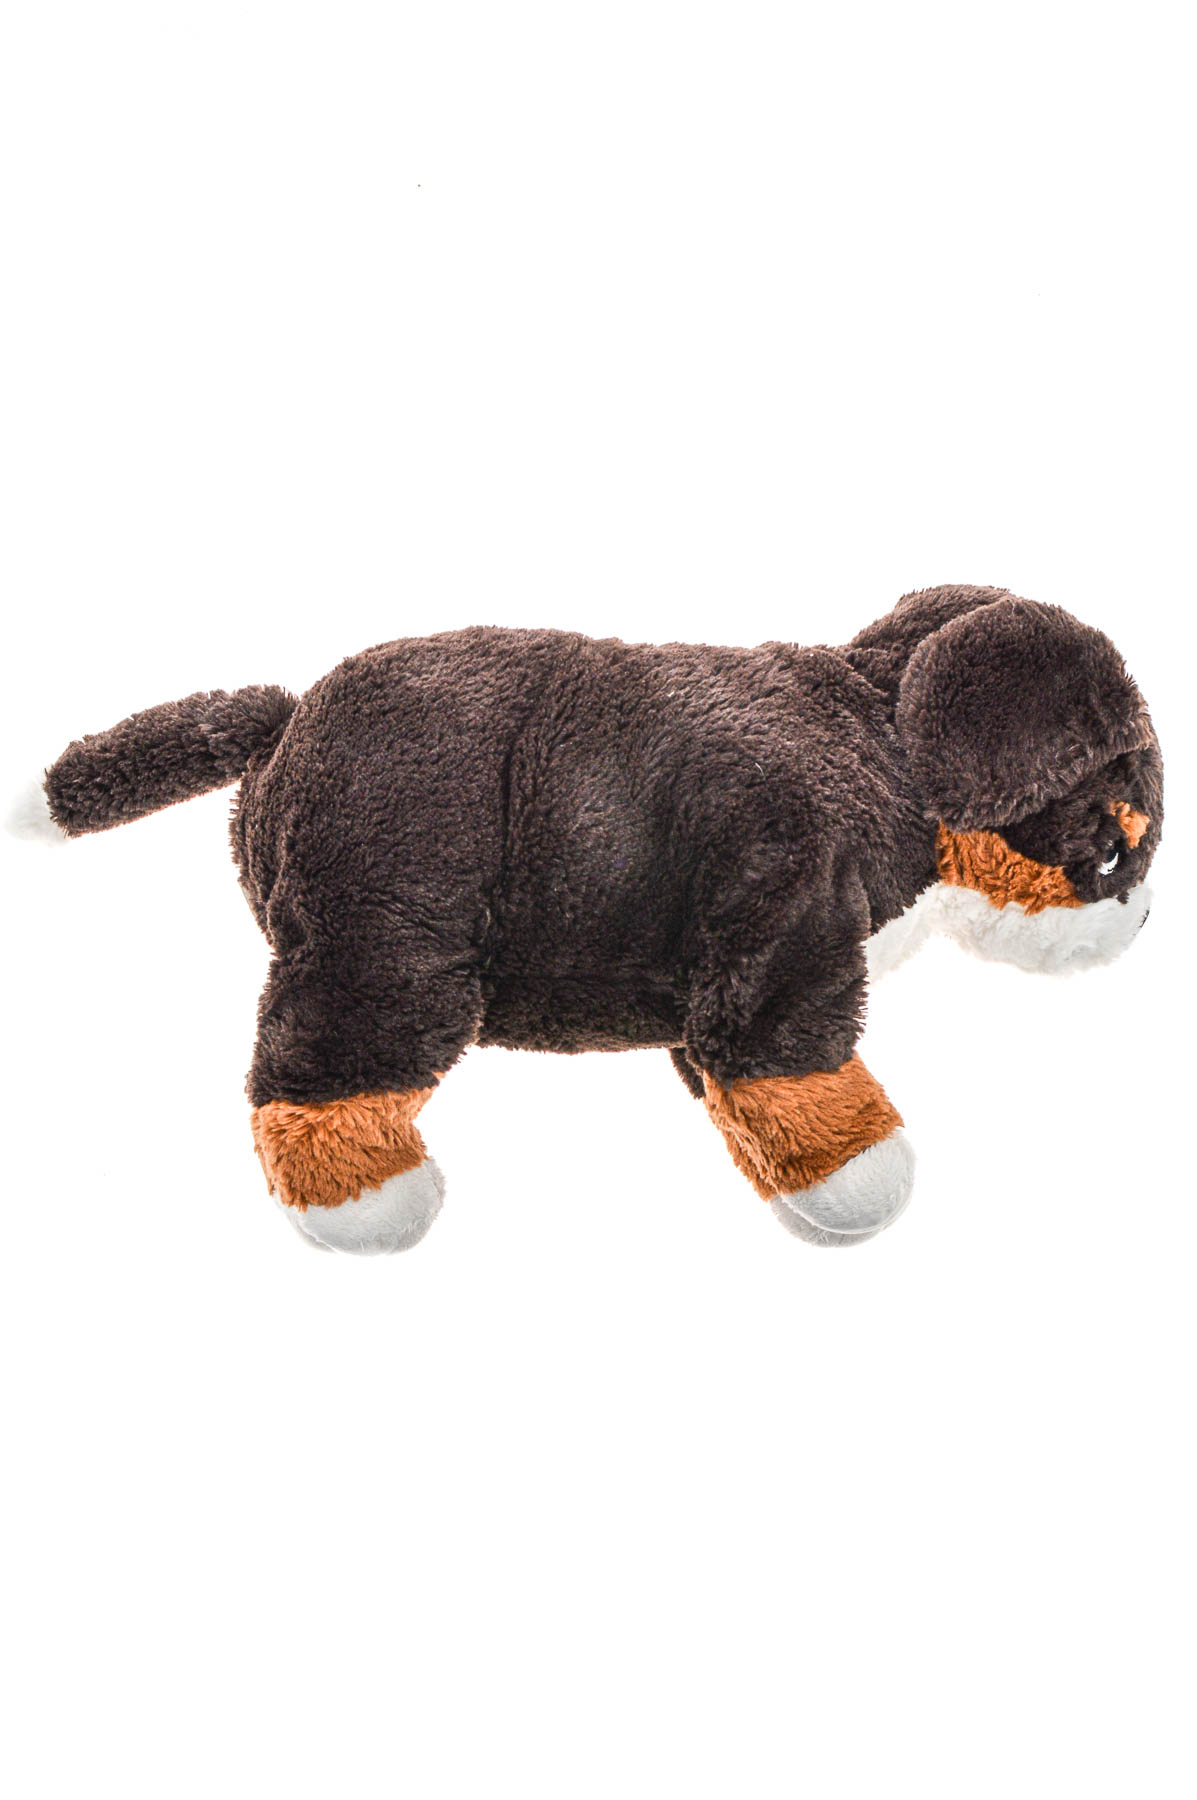 Stuffed toys - Dog - 2